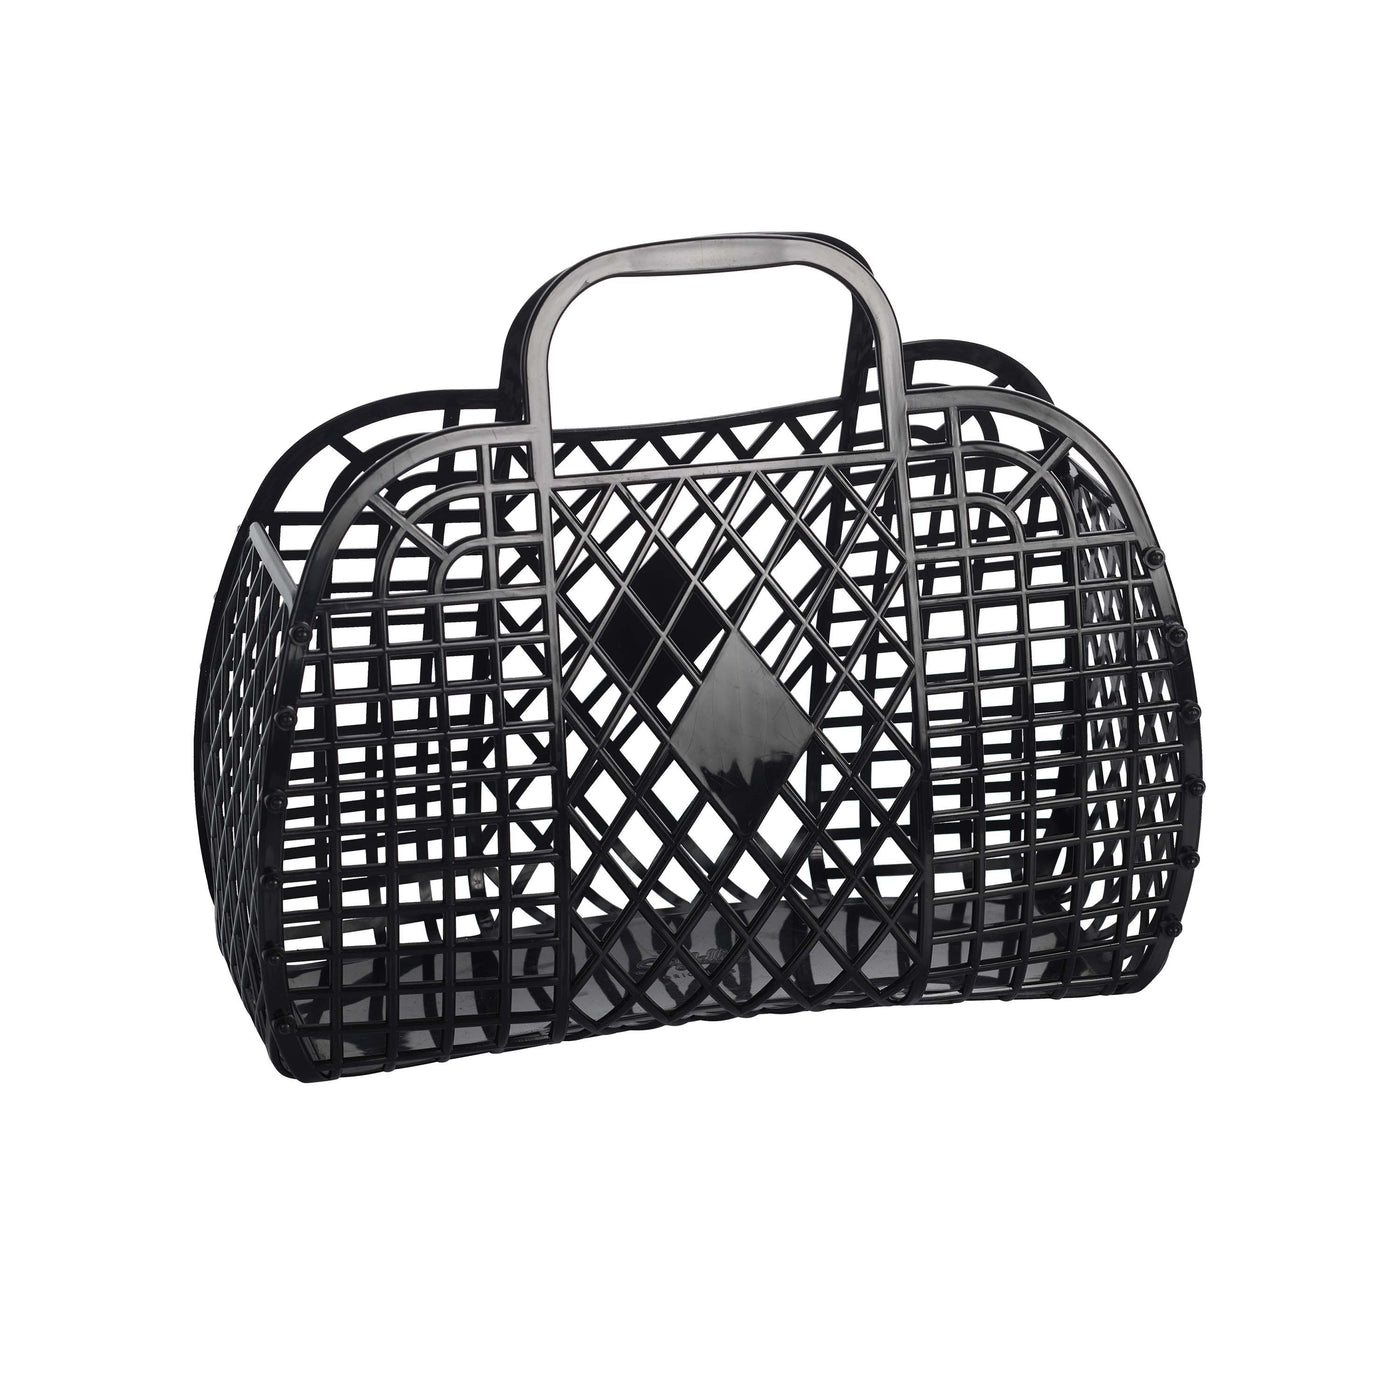 Sun Jellies Retro Basket Small - Black Basket IS Gifts 